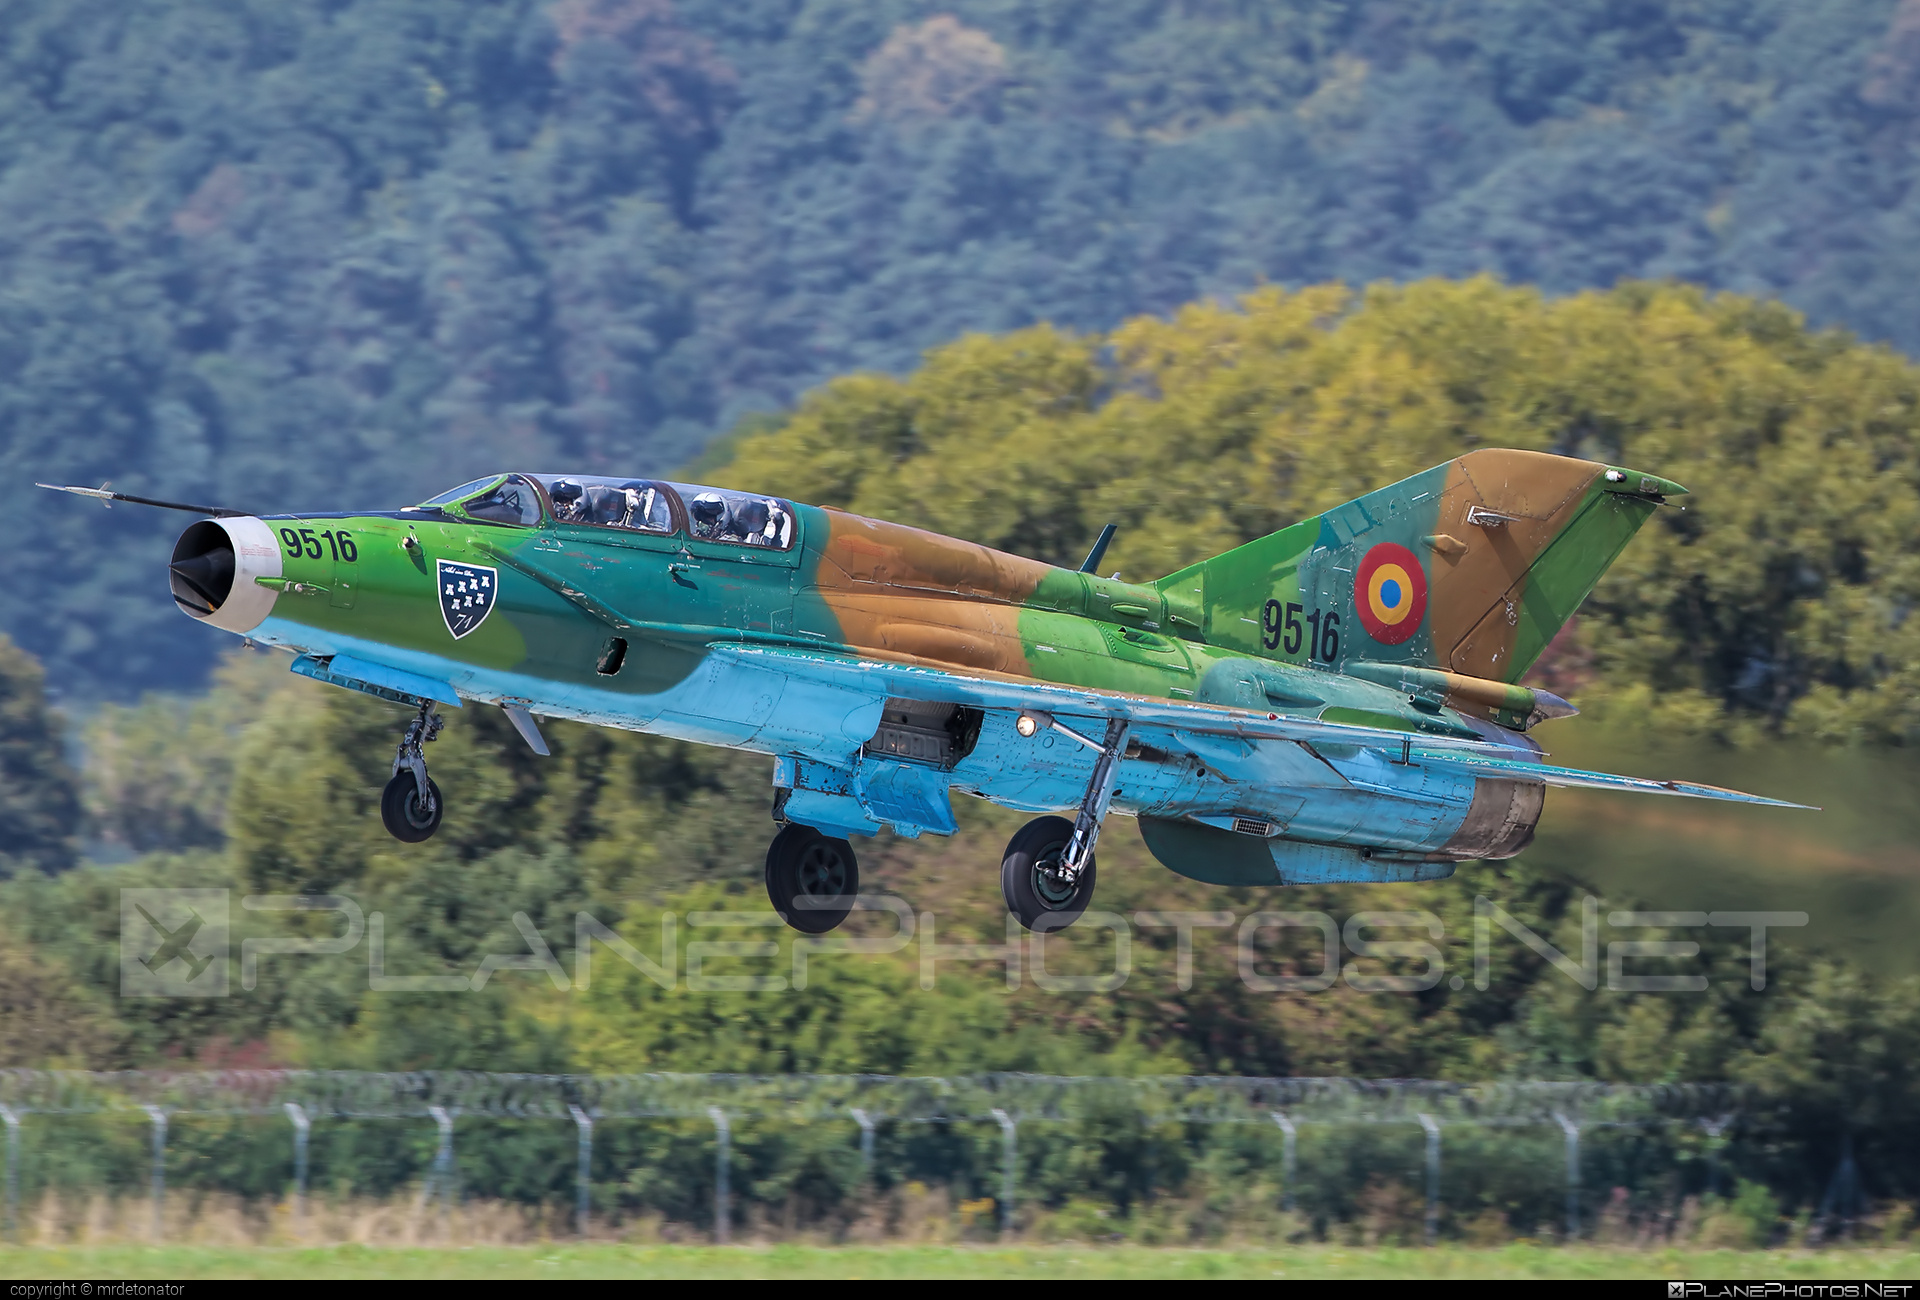 Mikoyan-Gurevich MiG-21UM - 9516 operated by Forţele Aeriene Române (Romanian Air Force) #forteleaerieneromane #mig #mig21 #mig21um #mikoyangurevich #romanianairforce